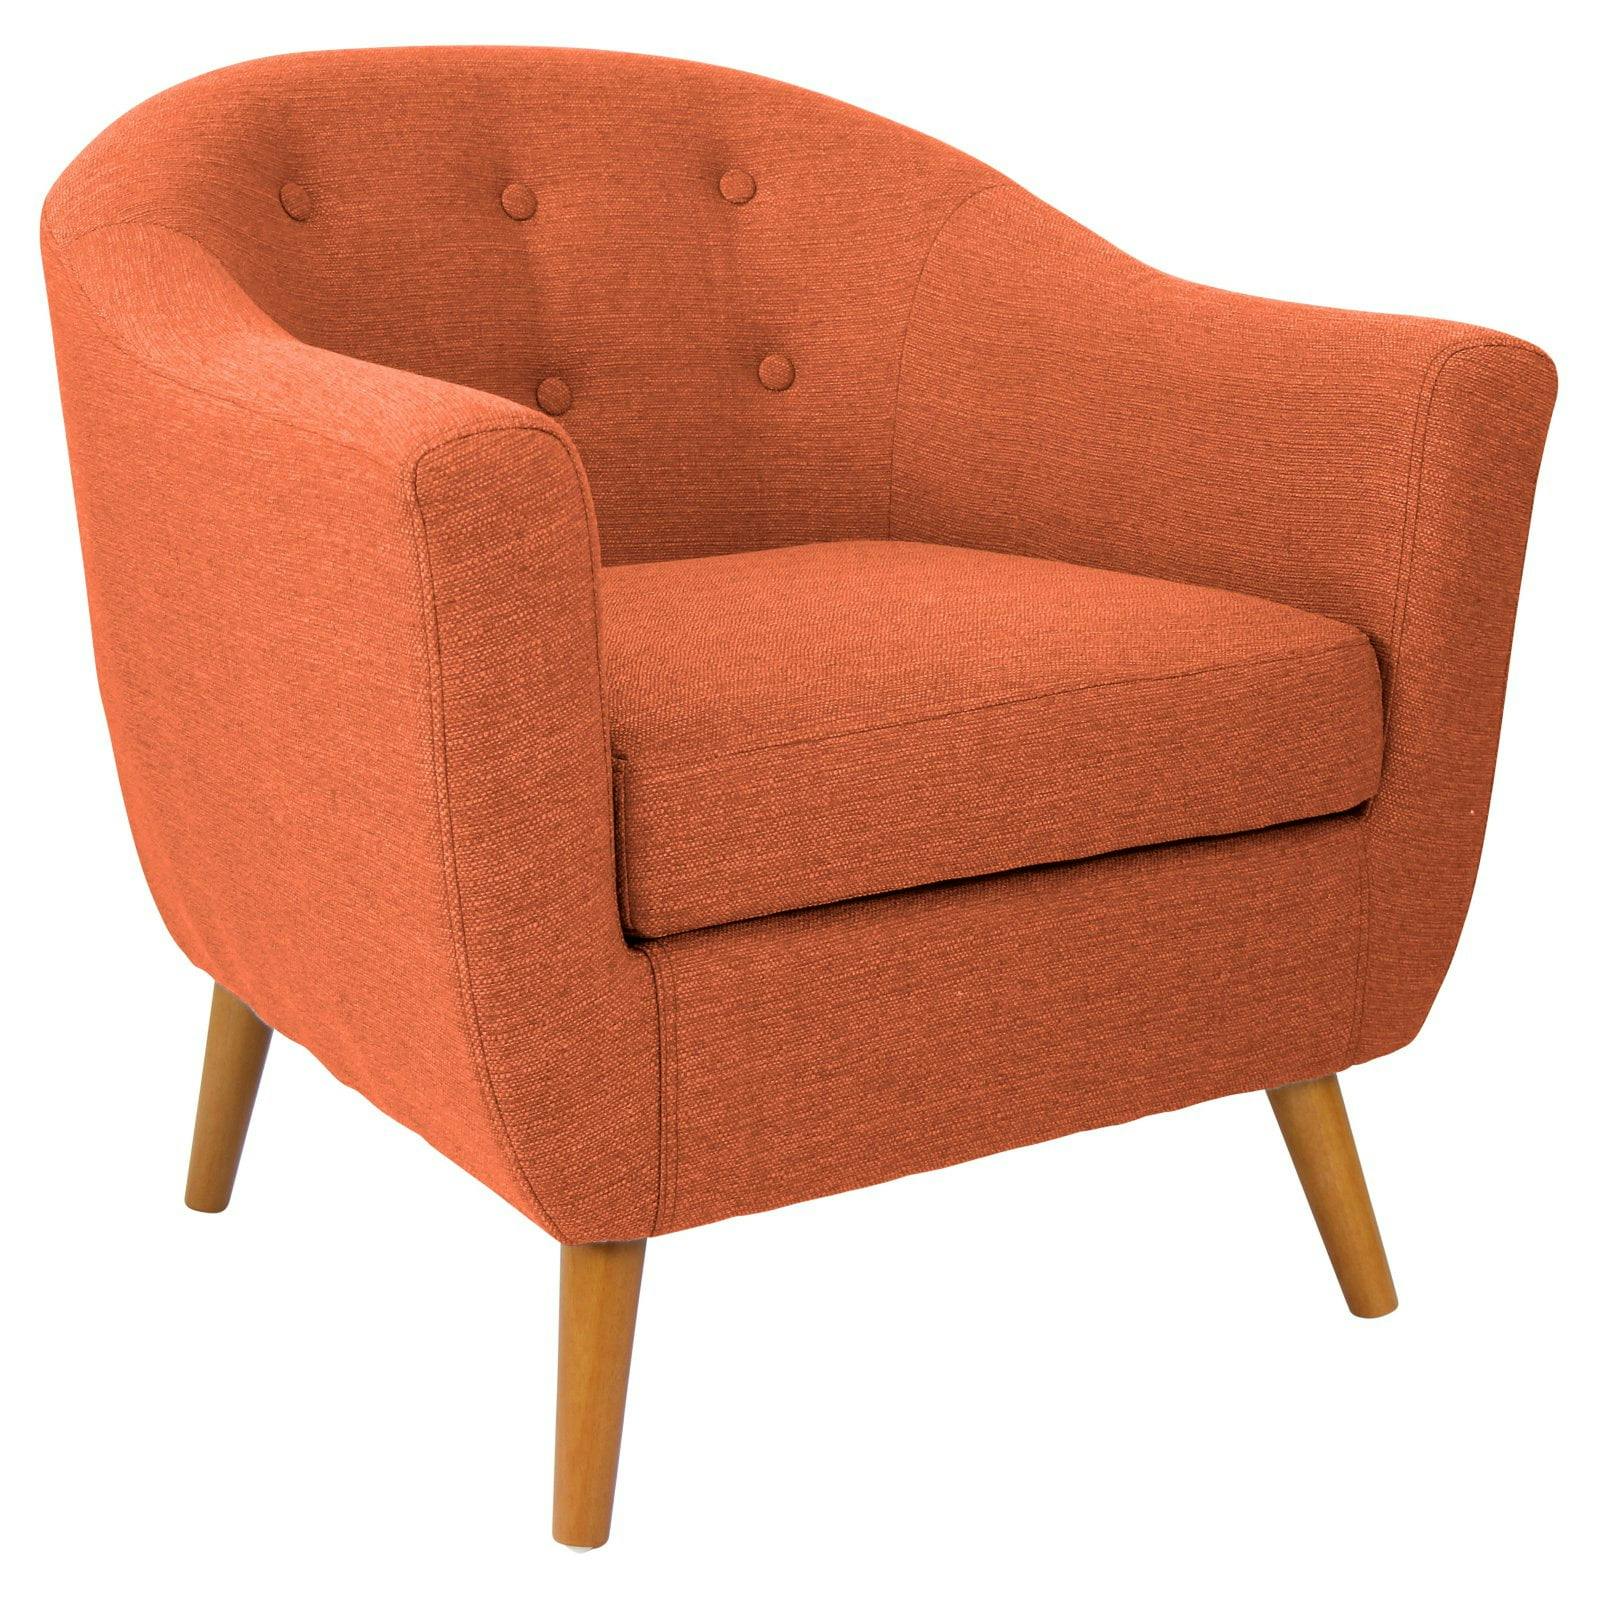 Scandinavian Orange Wood Accent Arm Chair, 30"W x 31"H